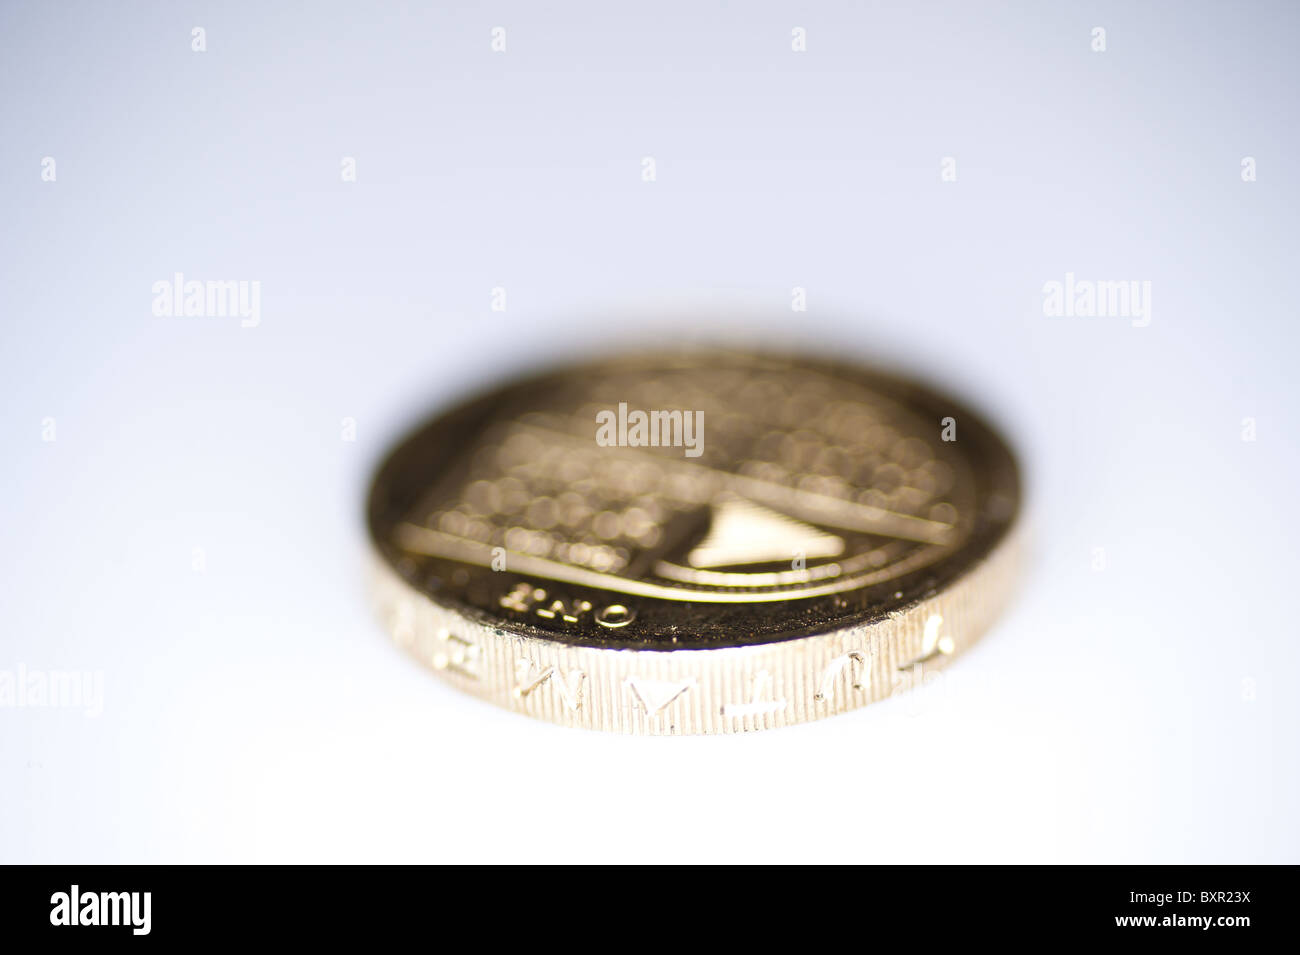 British Pound Coin Stock Photo